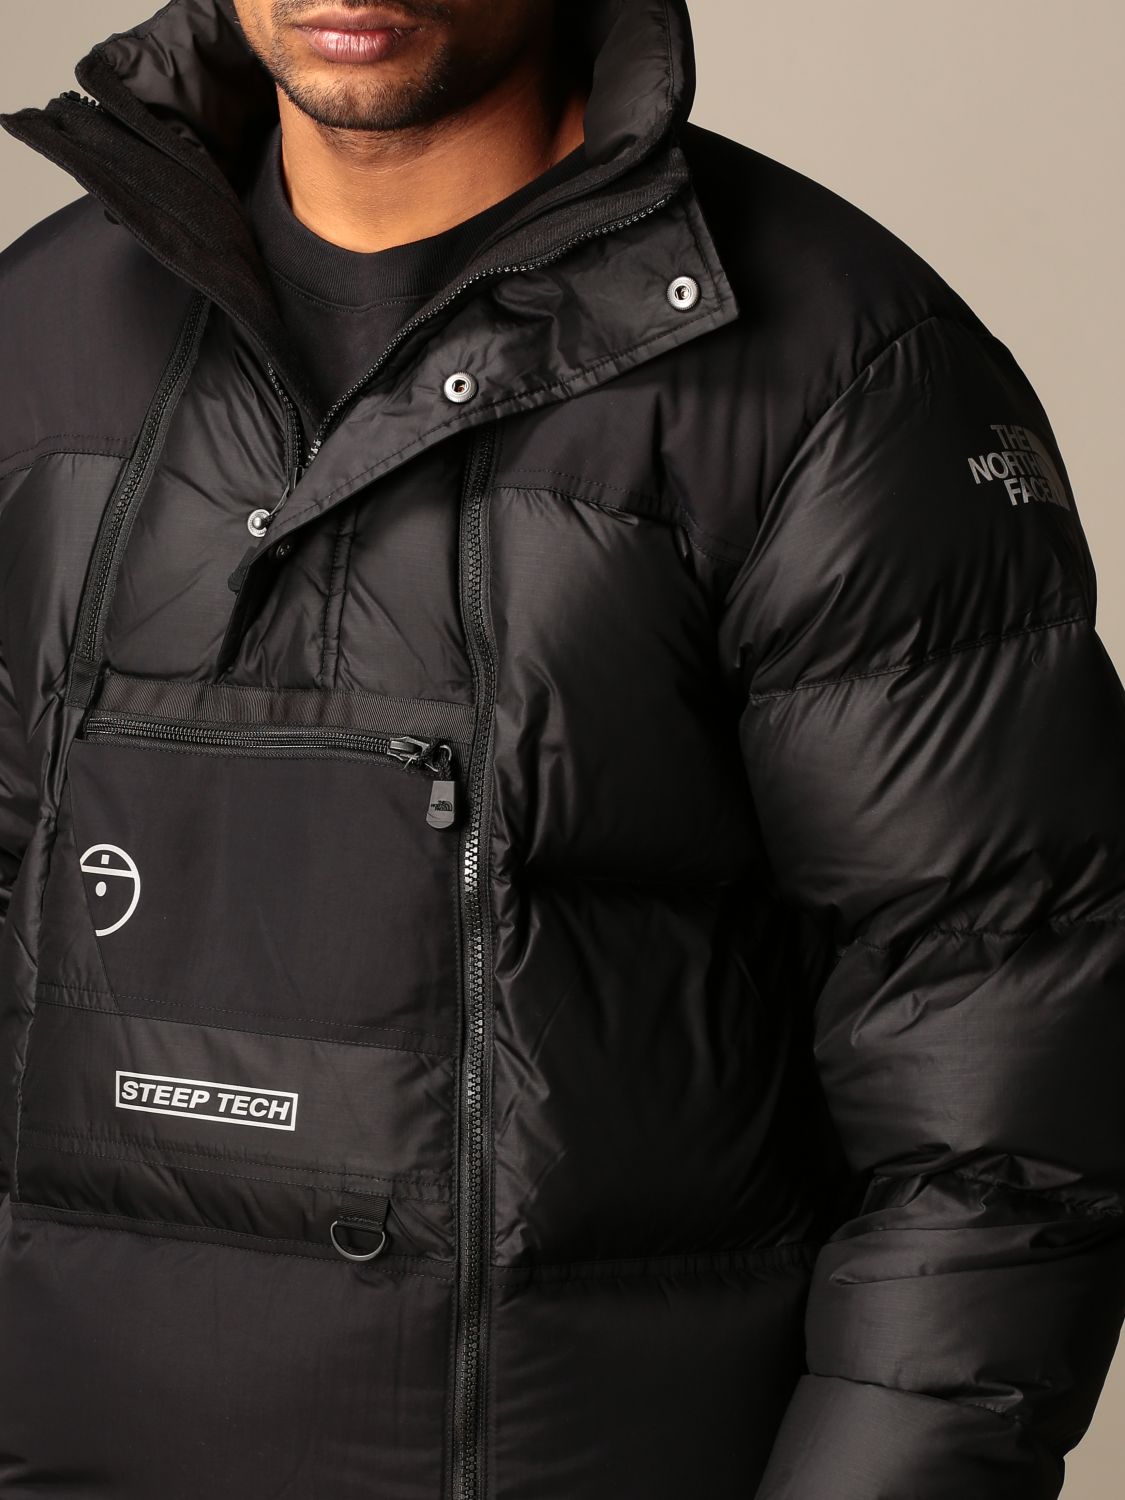 north face colorblock jacket